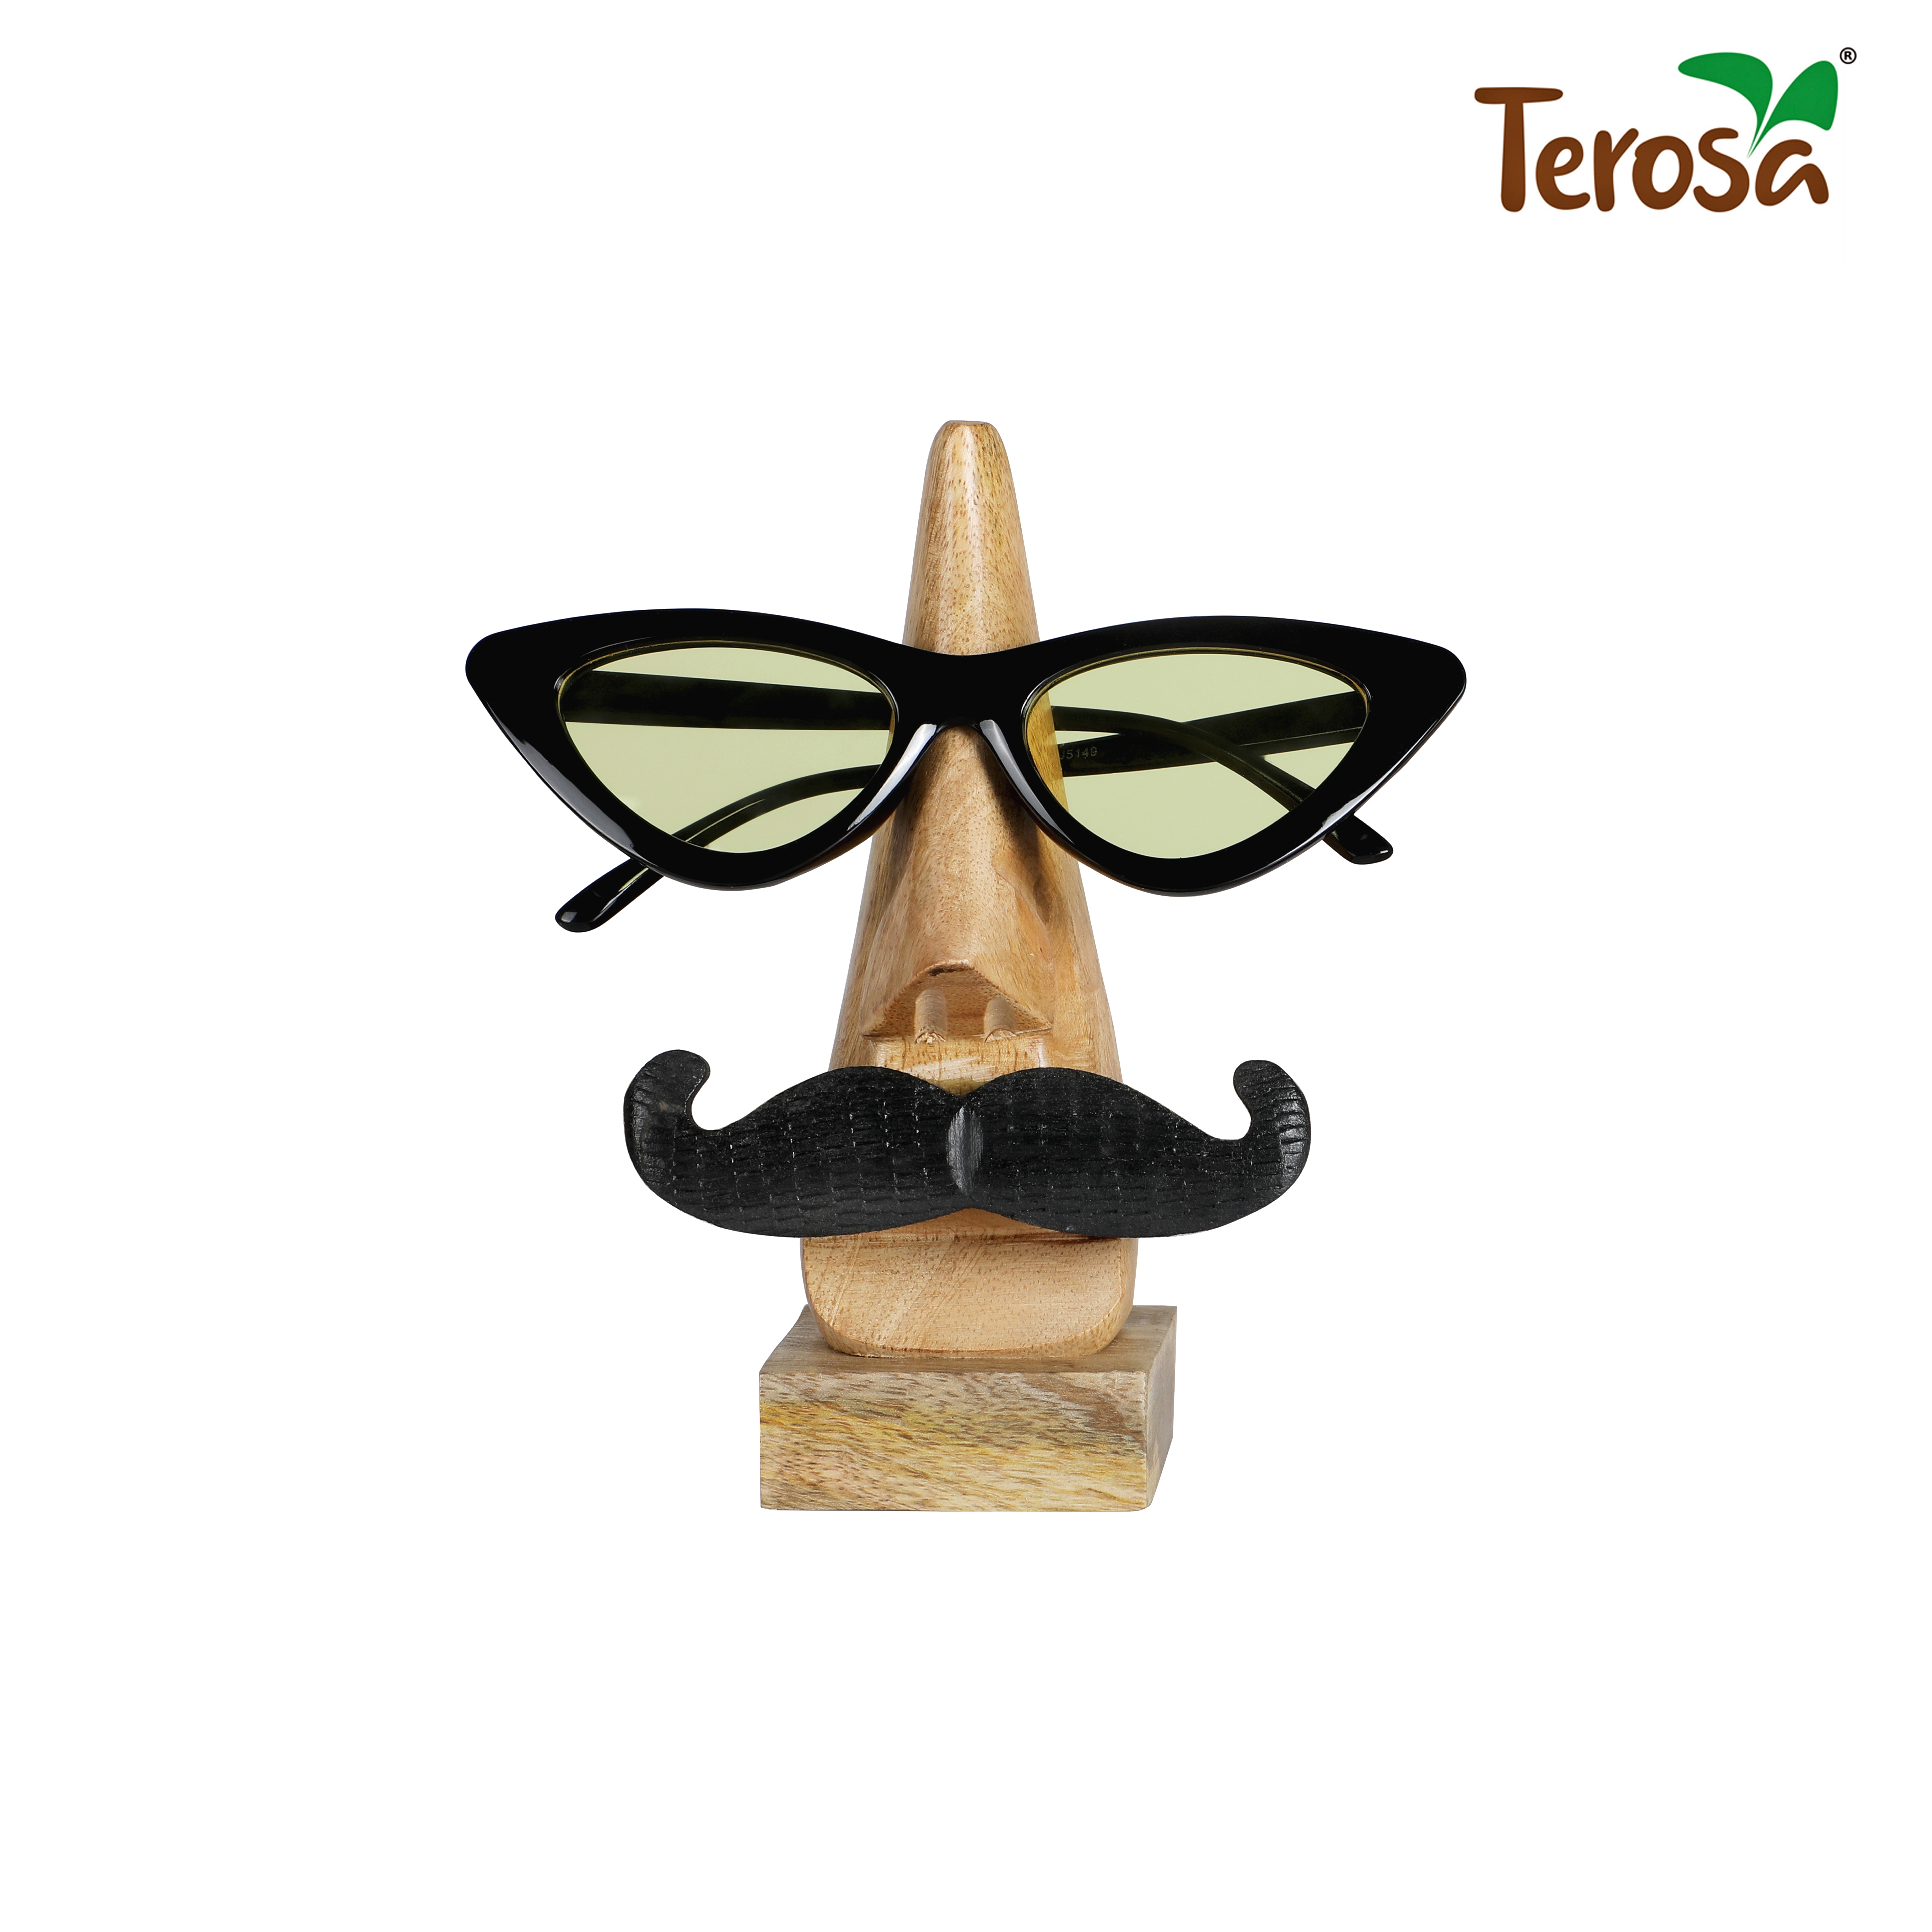 Terosa | Spectacles or Eye-glasses Stand - Senor 